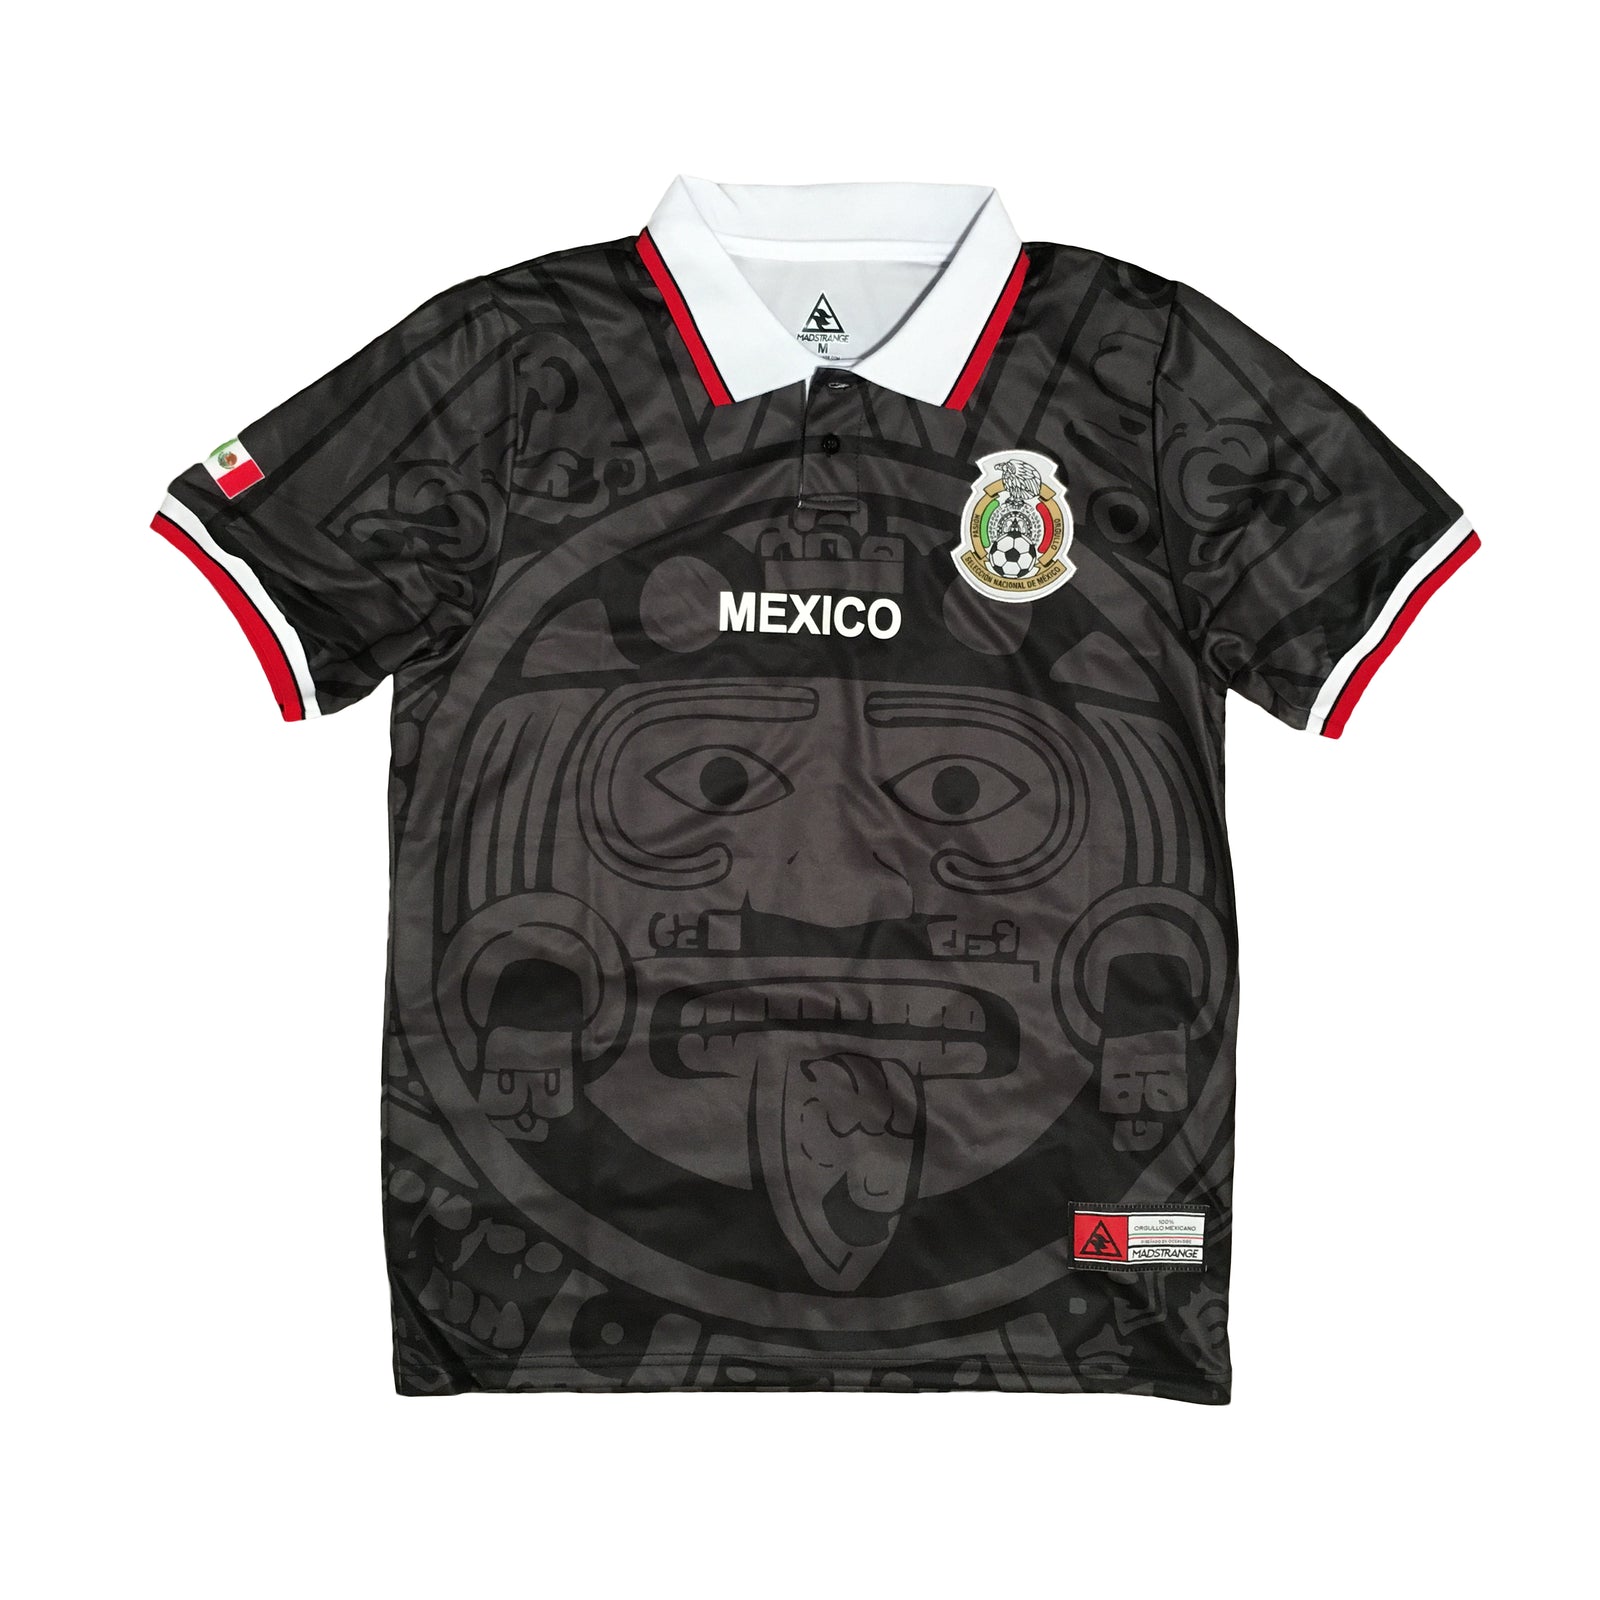 Buy > aztec mexico jersey > in stock